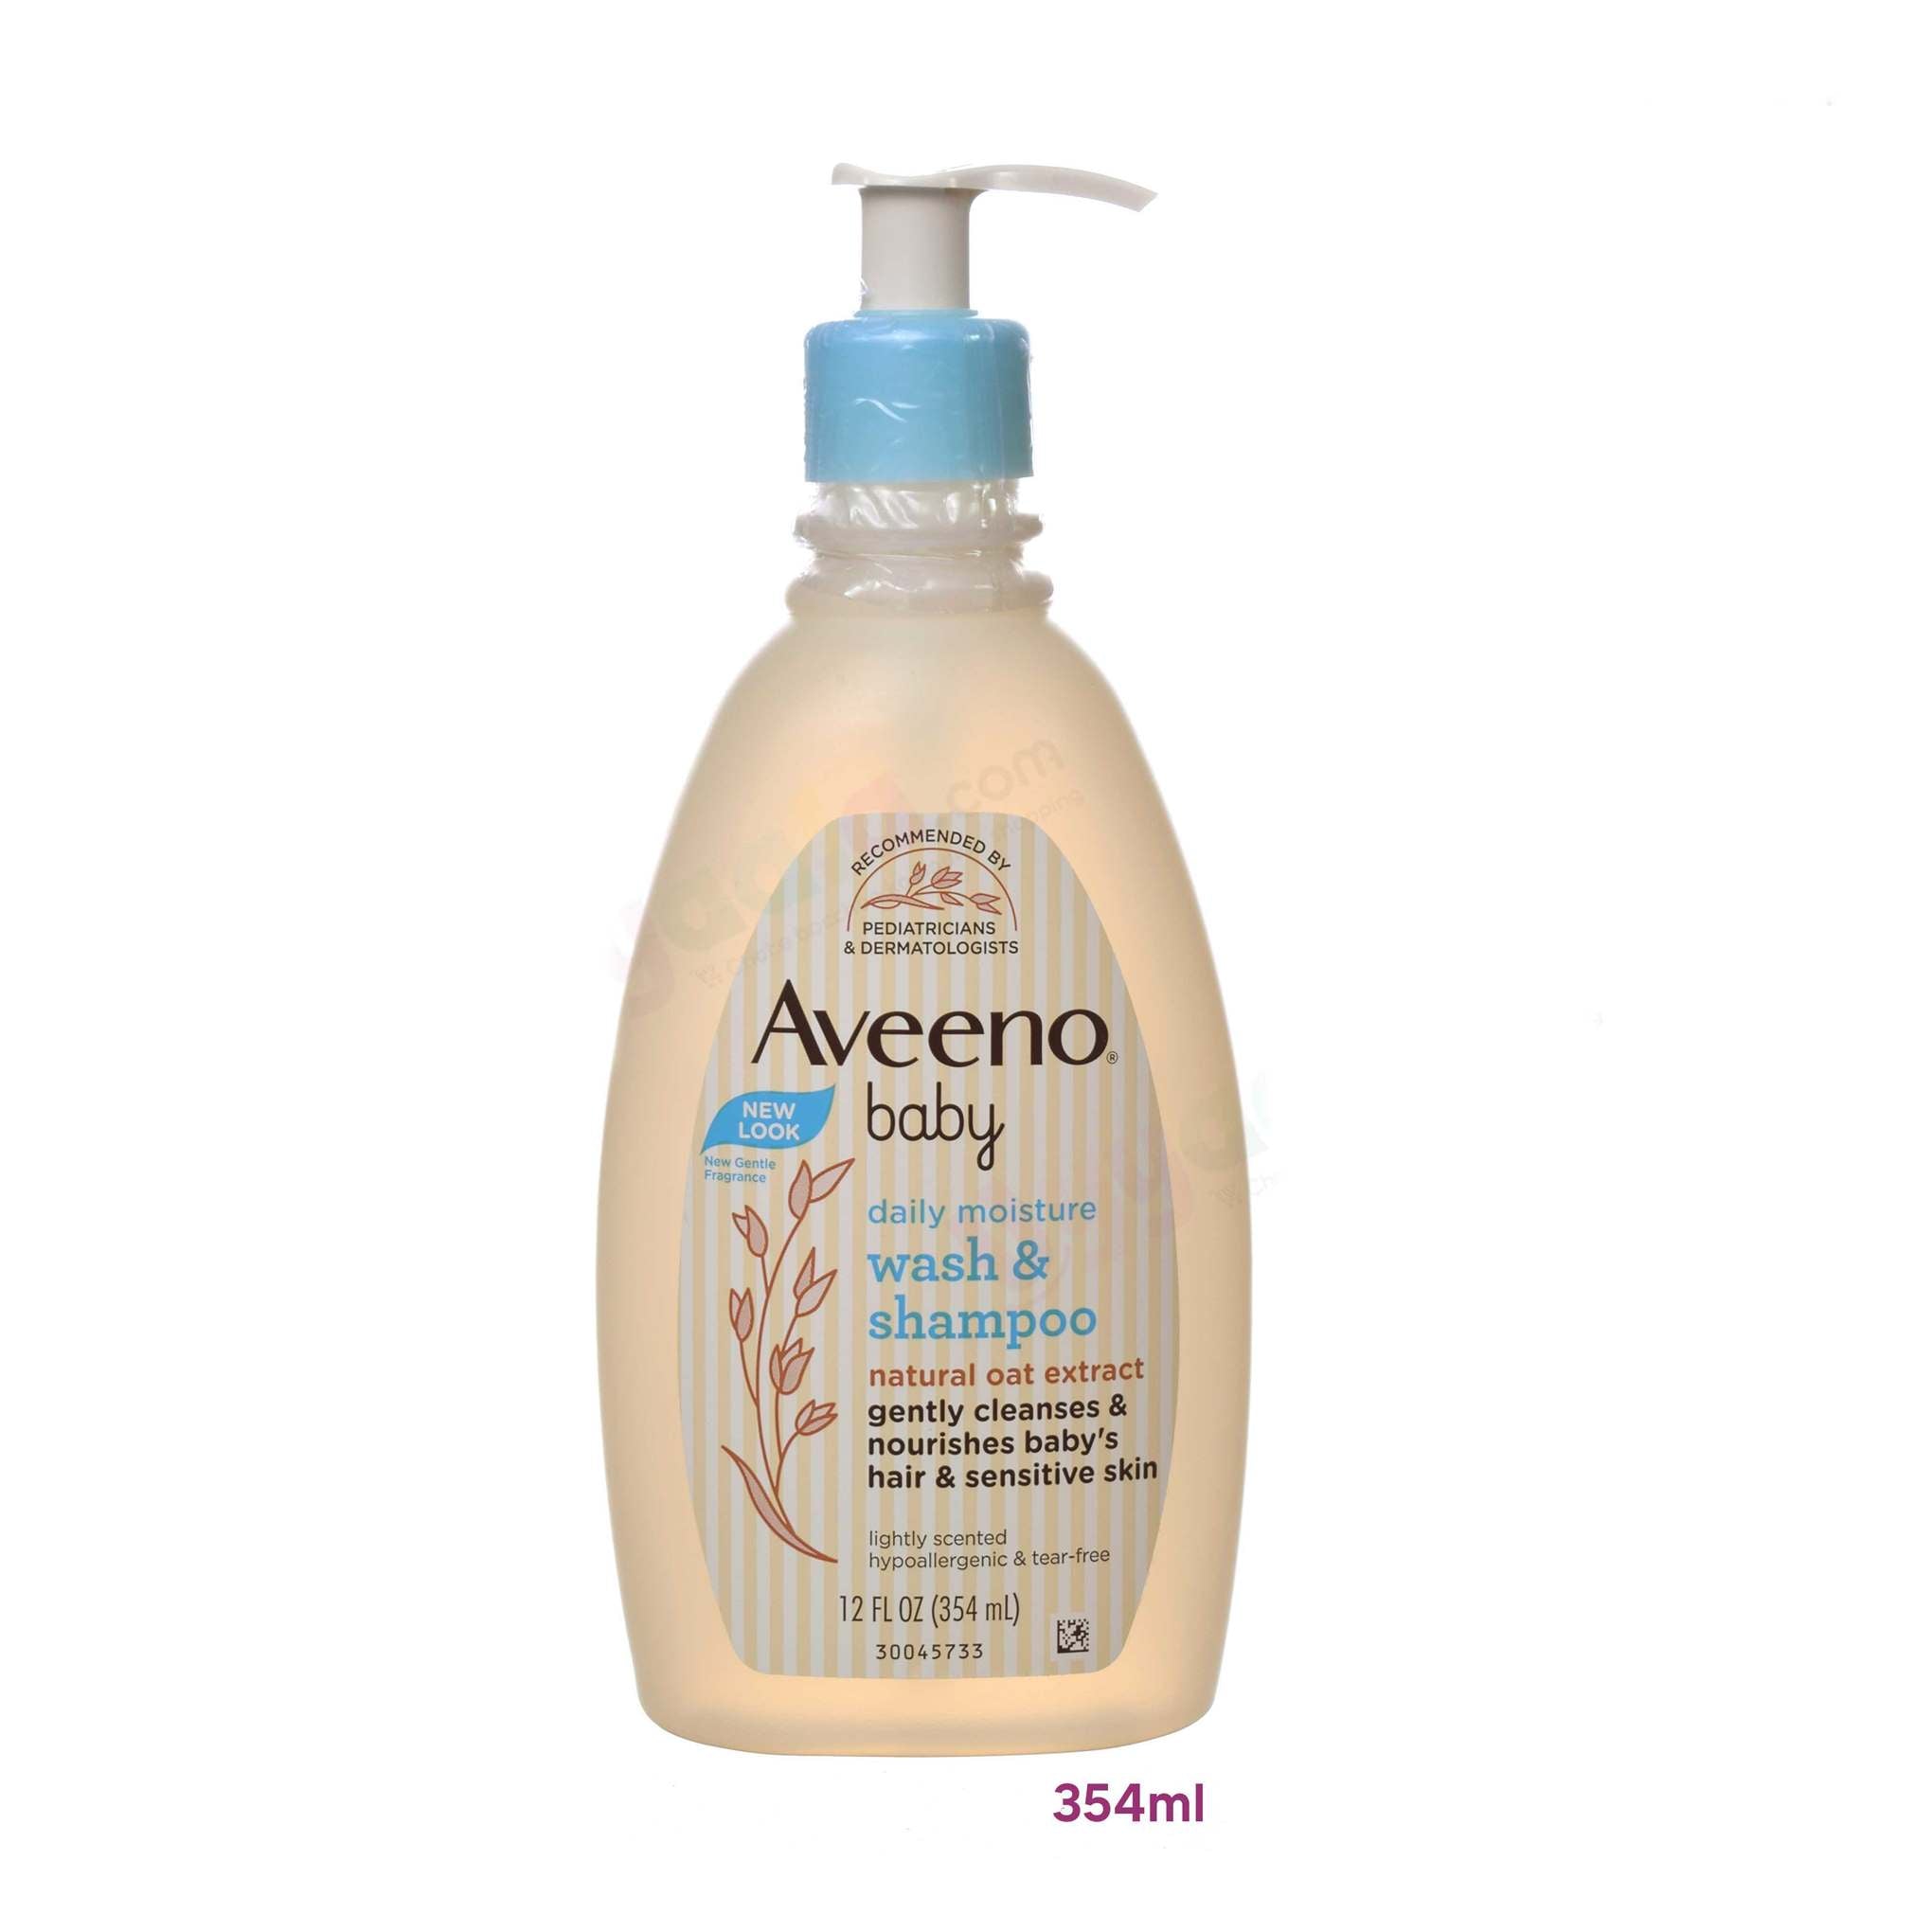 AVEENO BABY Daily moisture wash & shampoo, natural oat extract - 354 ml